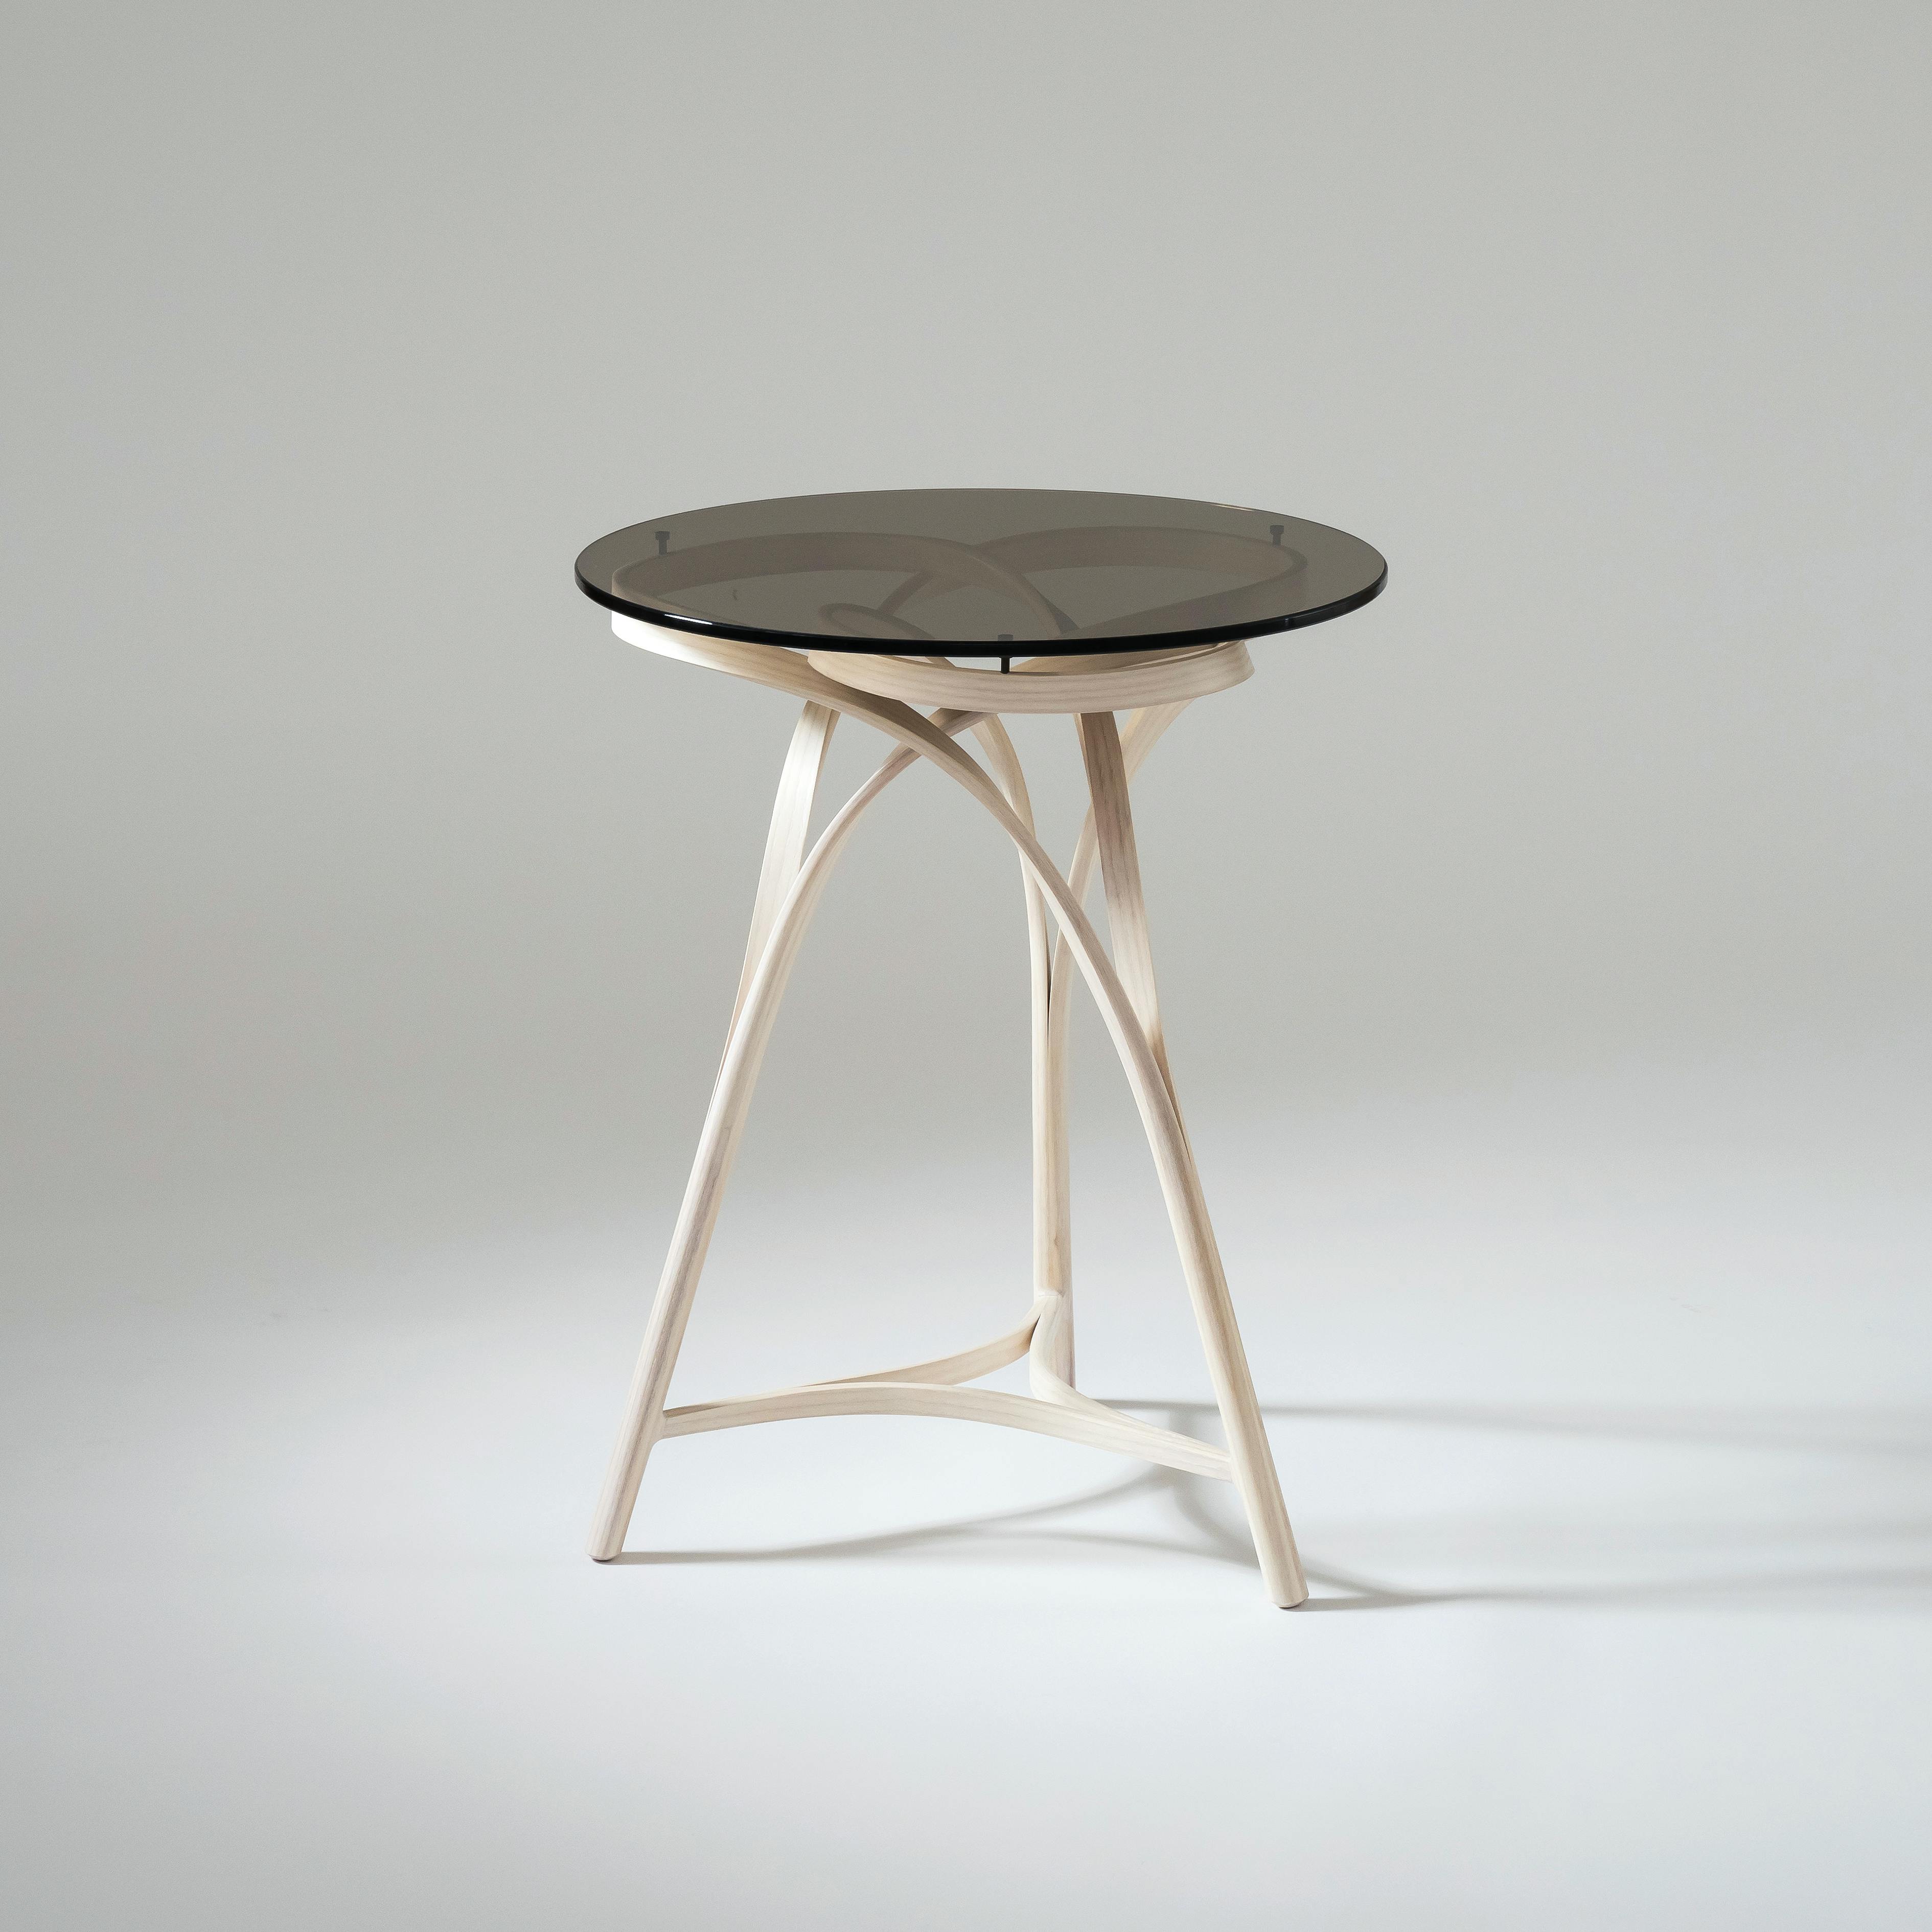 bent wood side table with glass top by Yuri Kobayashi